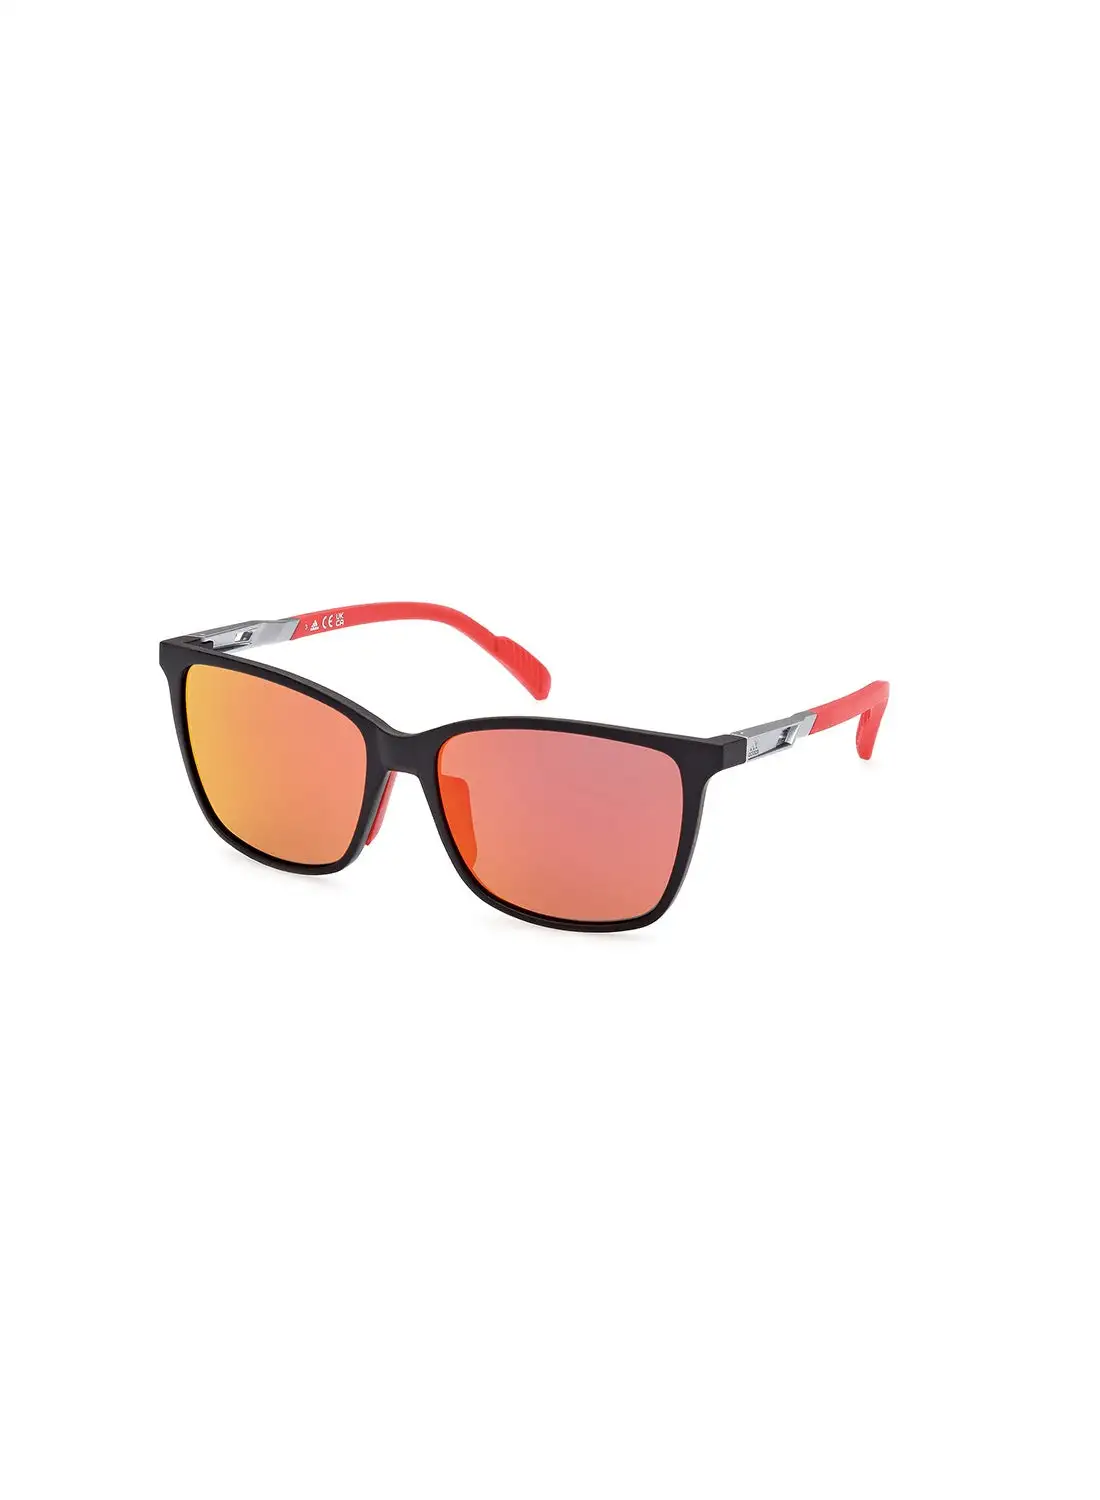 Adidas Unisex UV Protection Round Sunglasses - SP005902L58 - Lens Size: 58 Mm